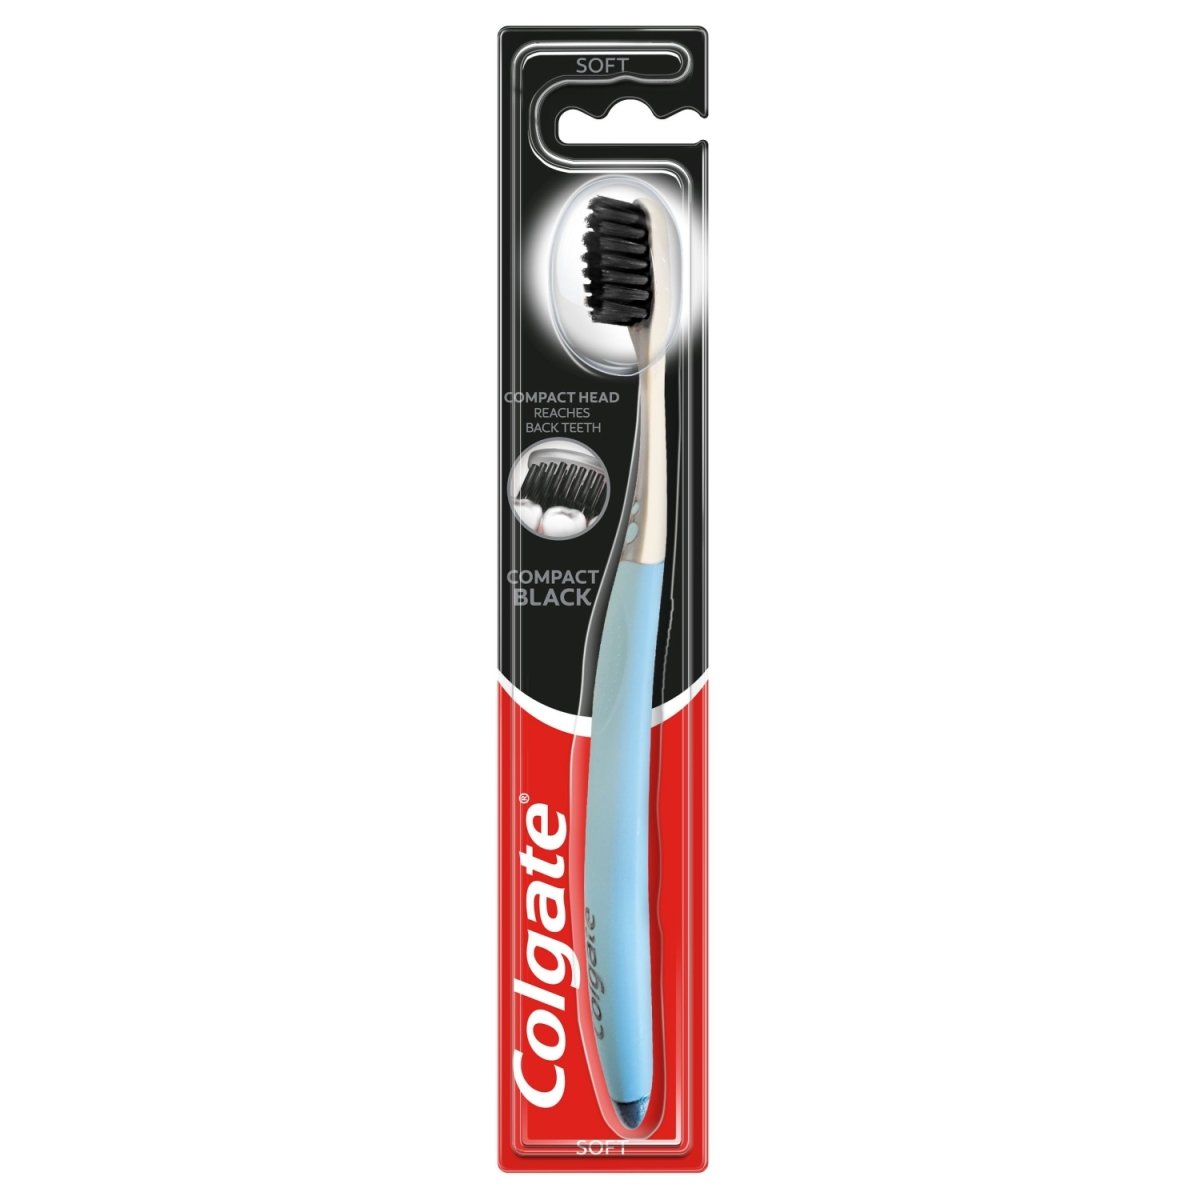 Colgate Toothbrush Compact Black - Intamarque 8718951361270